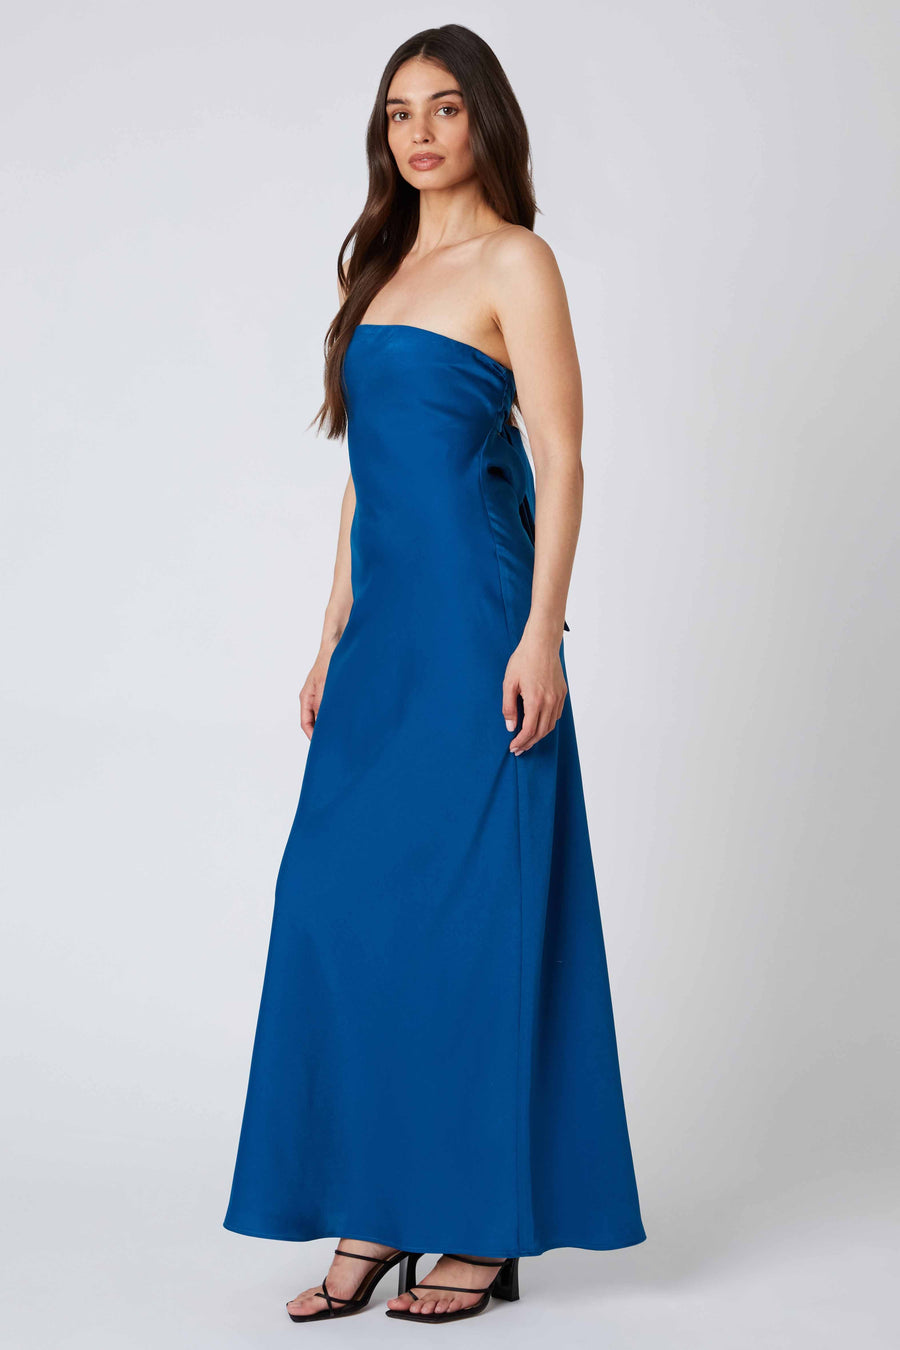 Teal blue maxi dress.